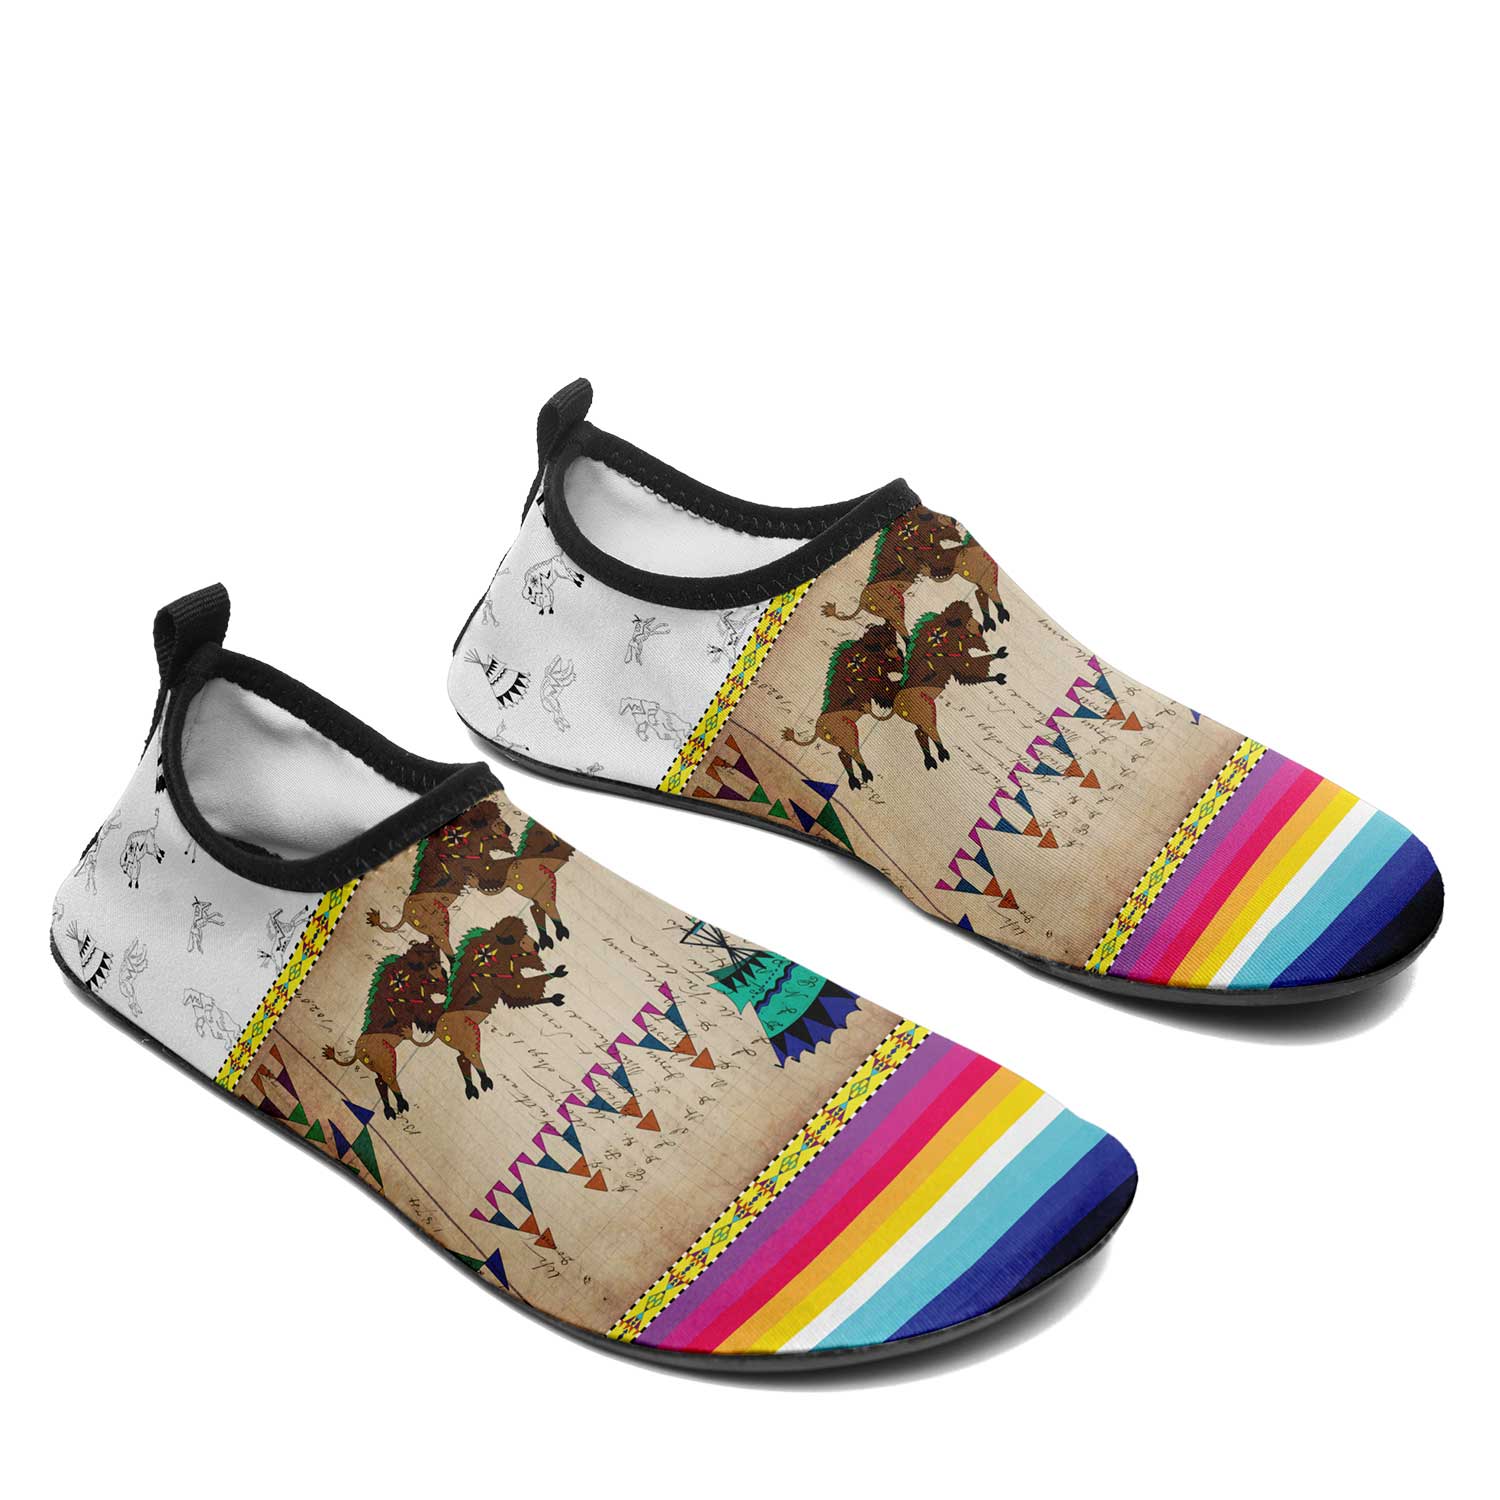 Buffalos Running White Clay Kid's Sockamoccs Slip On Shoes